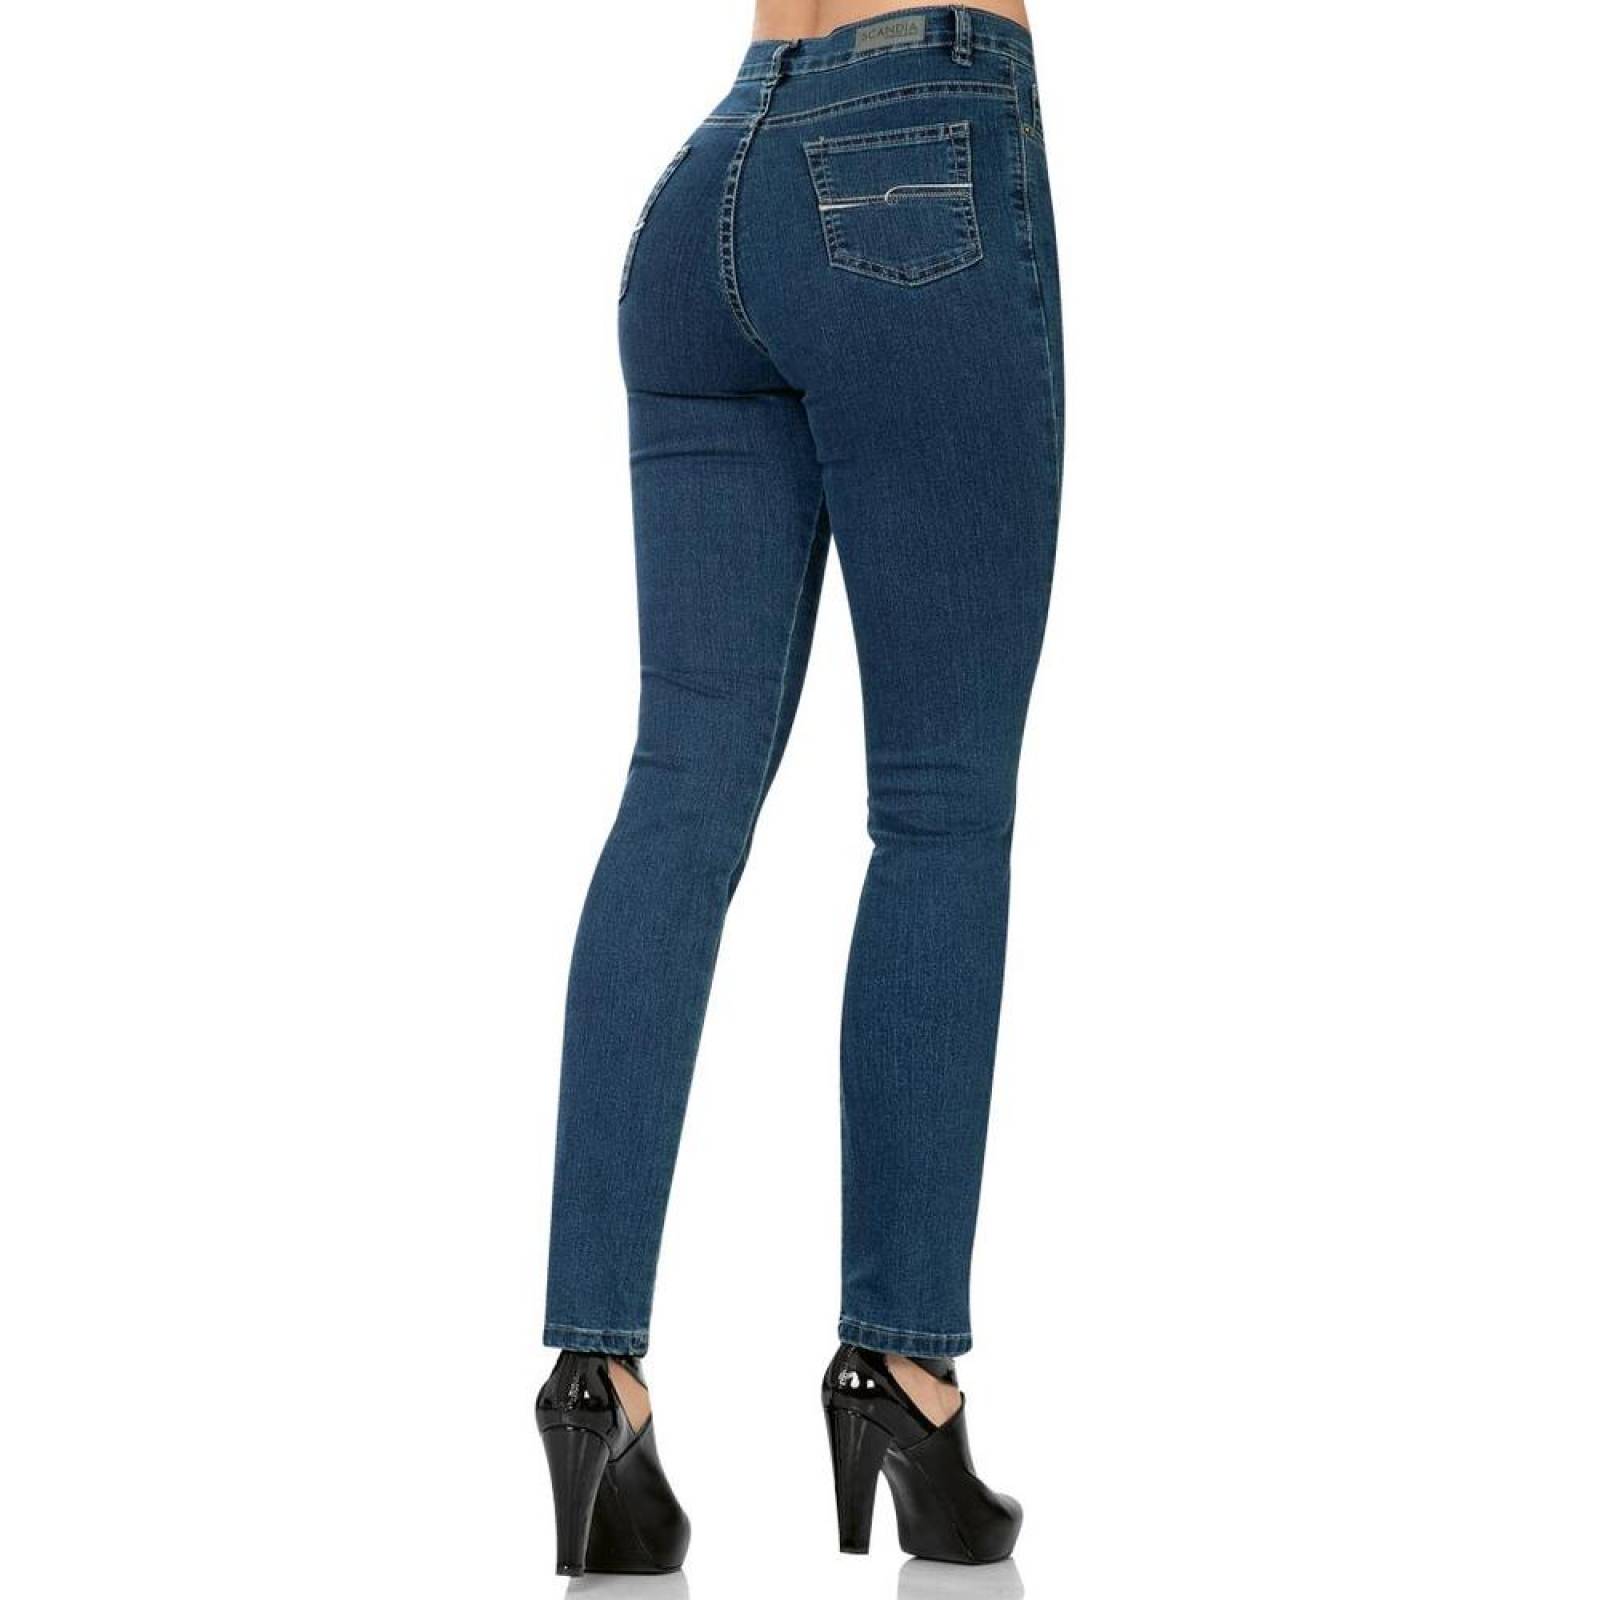 Jeans Básico Mujer SCandia Stone 65003005 Mezclilla Stretch 